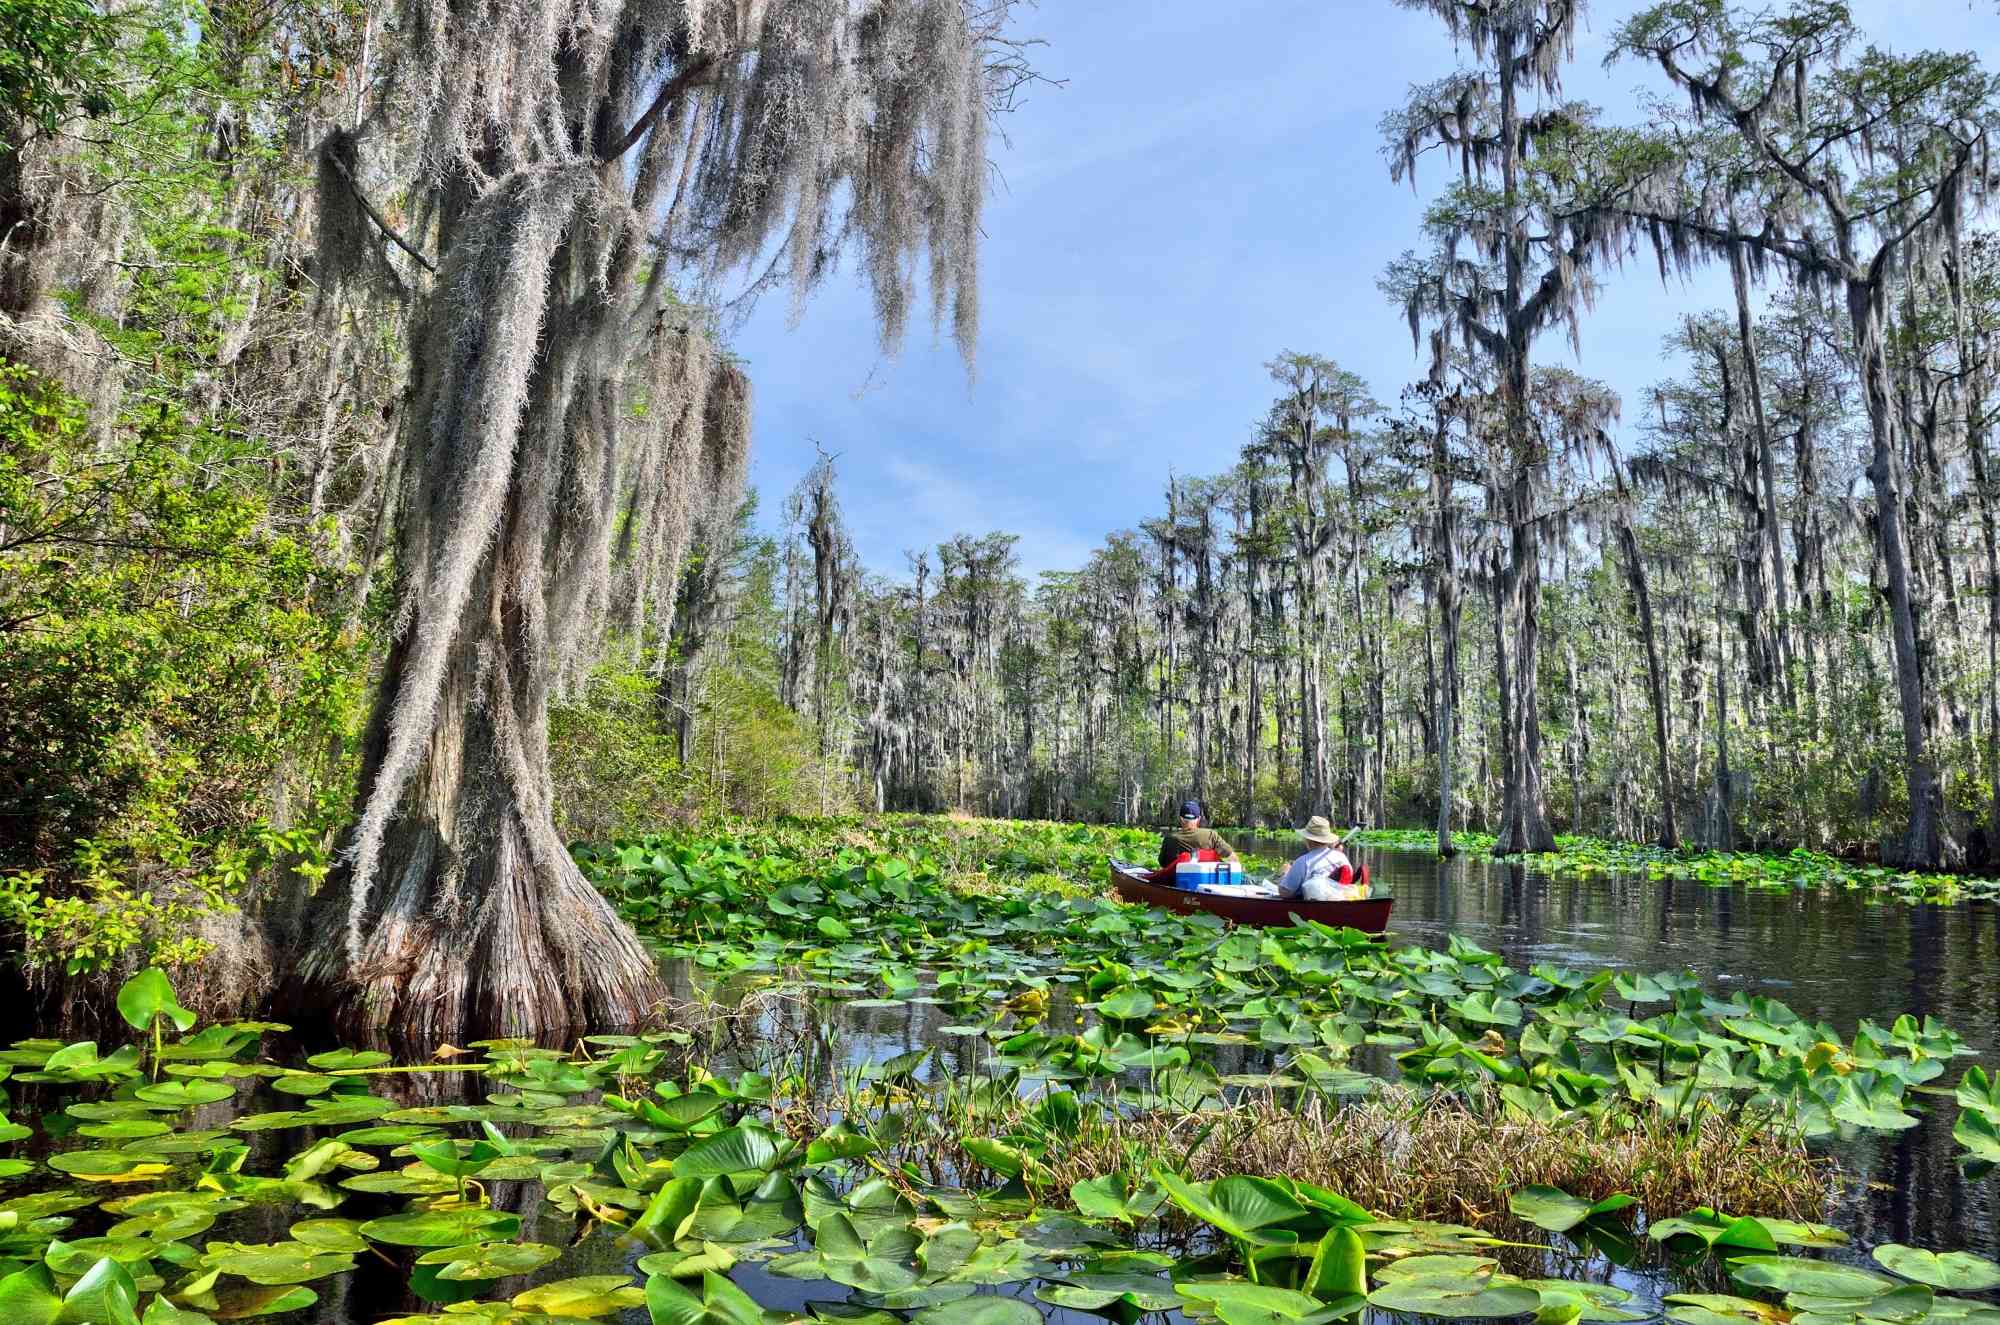 2014.04.05 - Okefenokee Swamp Landscape - Georgia - Timothy J (CC BY 2.0 DEED)